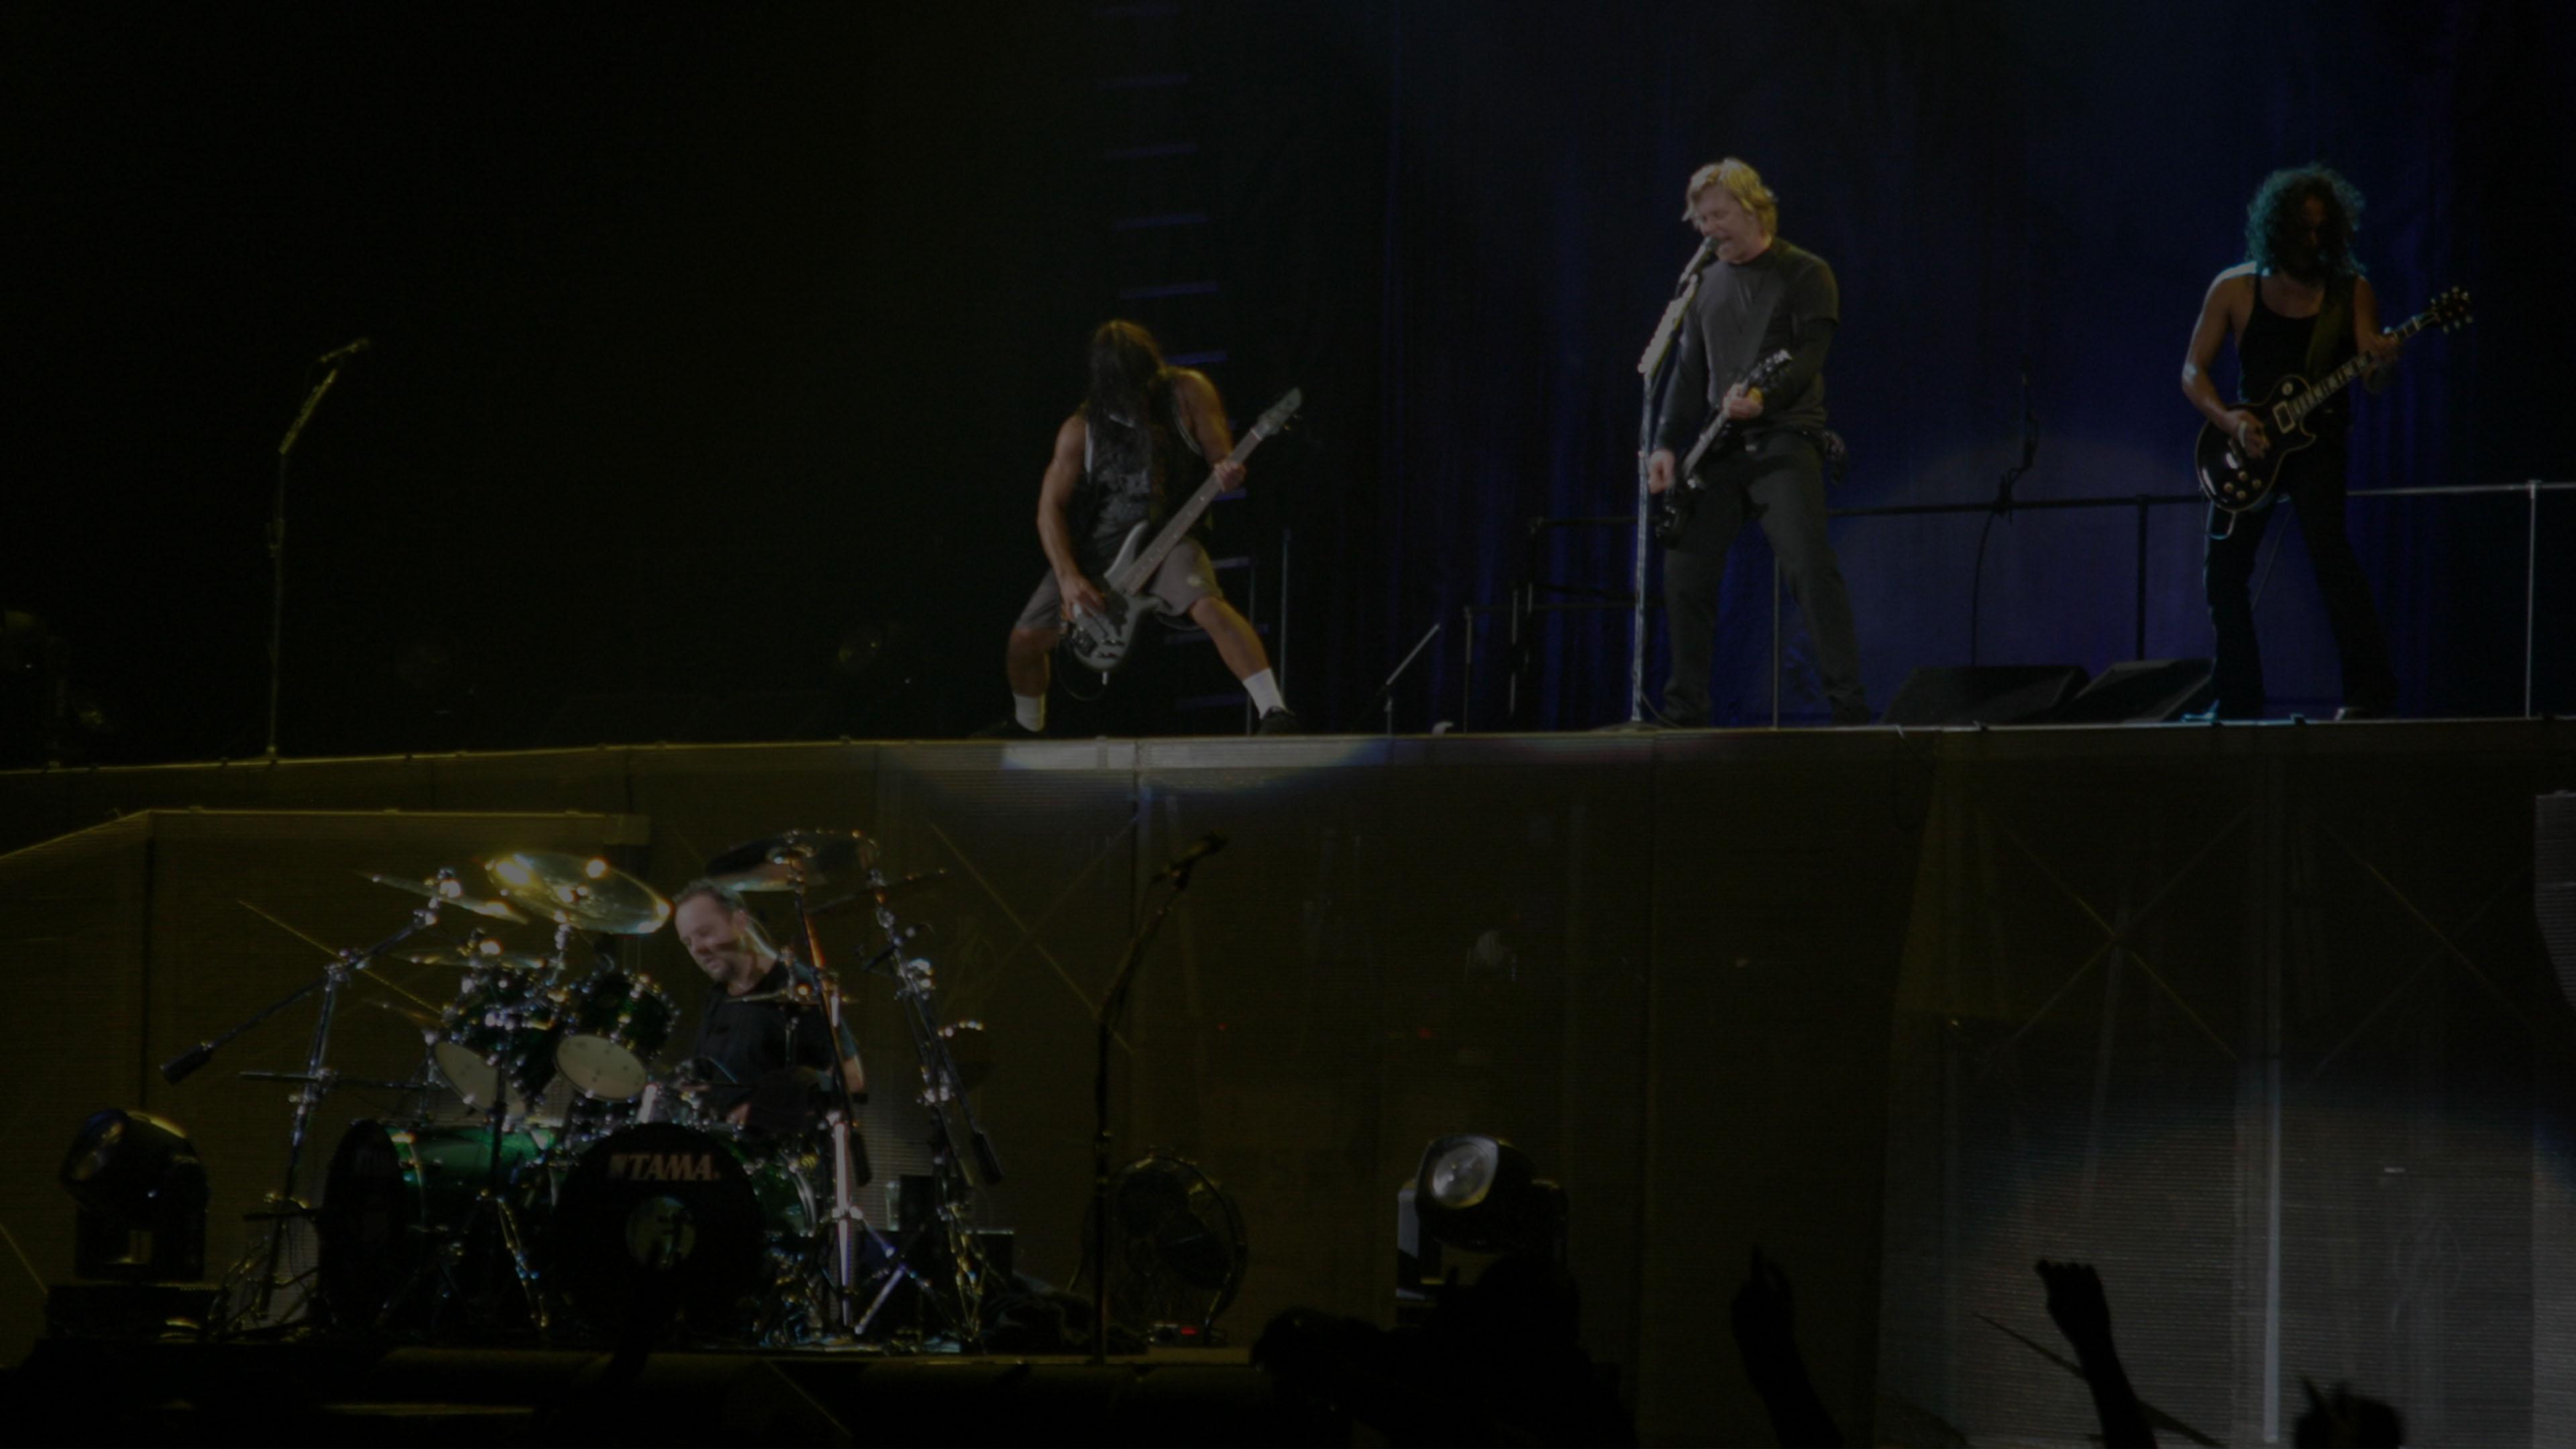 Metallica at Palais Omnisports de Paris-Bercy in Paris, France on December 9, 2003